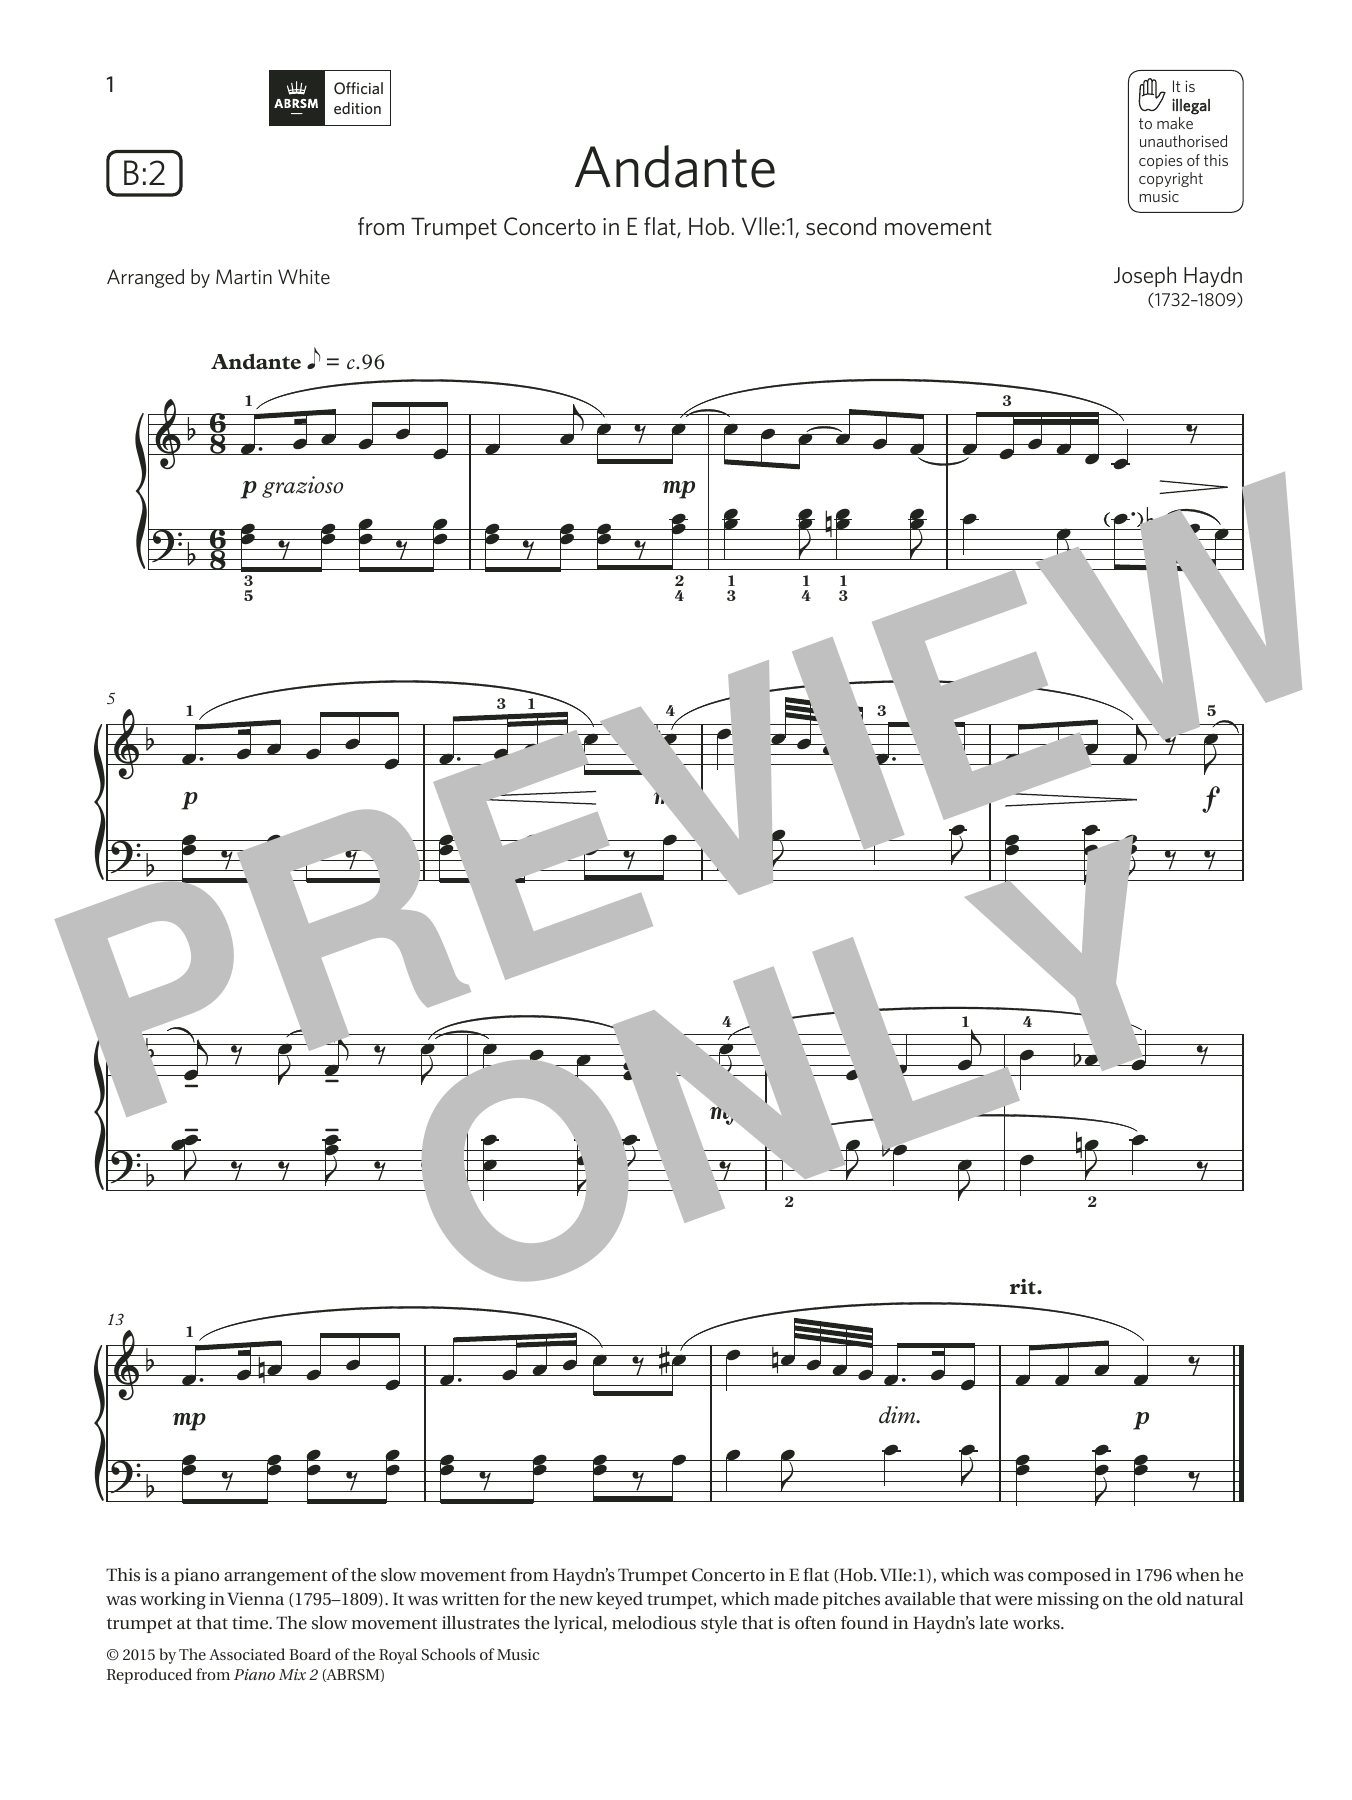 Download Joseph Haydn Andante (Grade 3, list B2, from the ABR Sheet Music